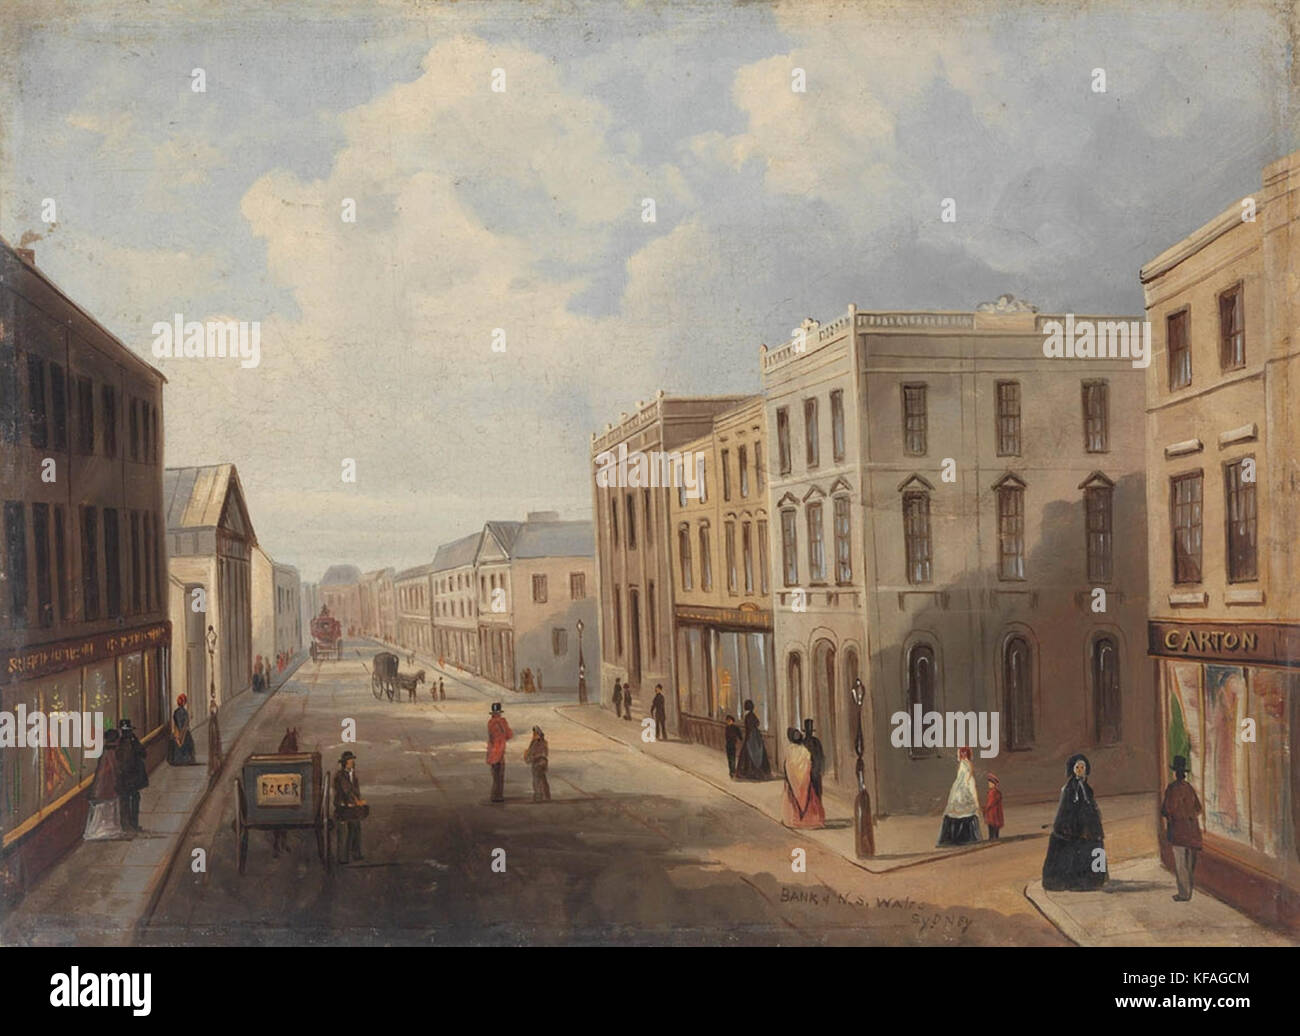 George Street Sydney 1855 Stock Photo